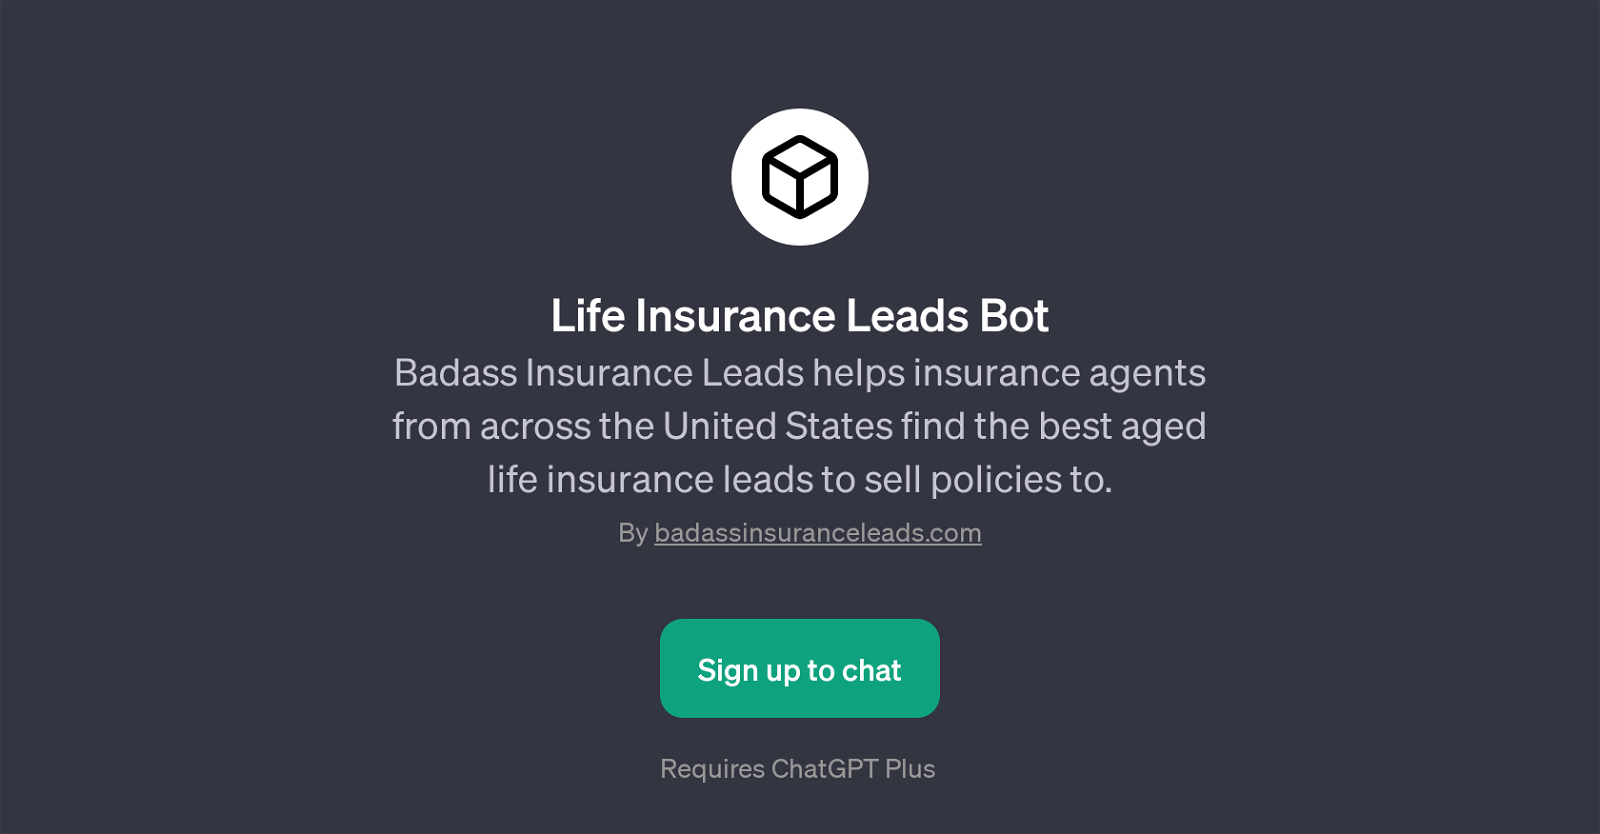 Life Insurance Leads Bot website